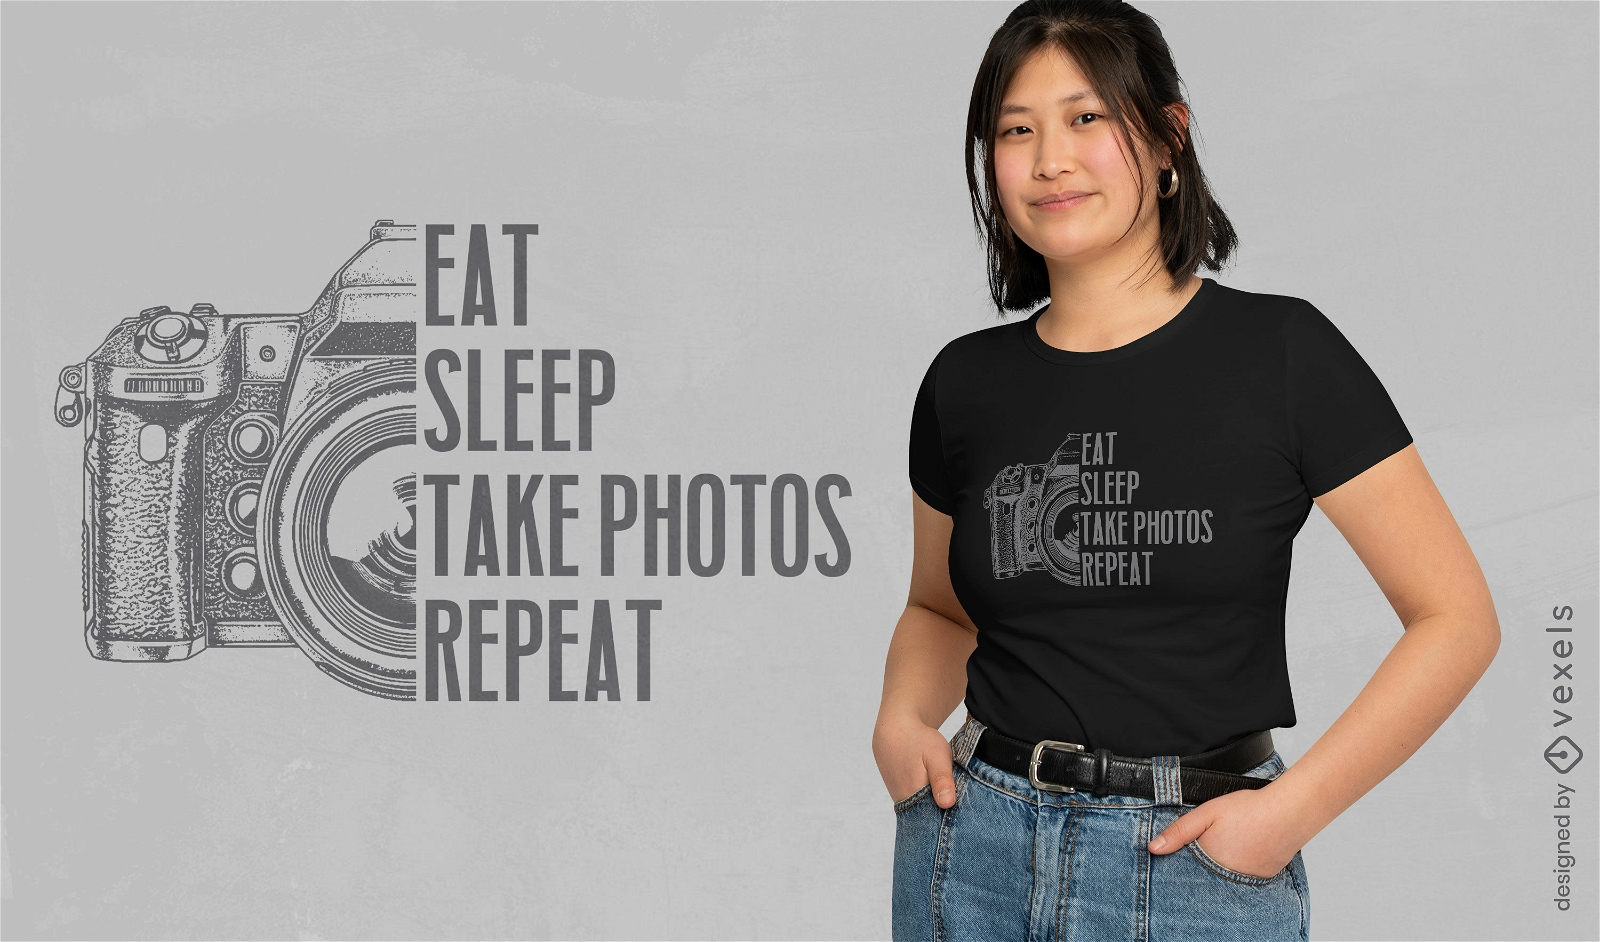 Take photos routine quote t-shirt design